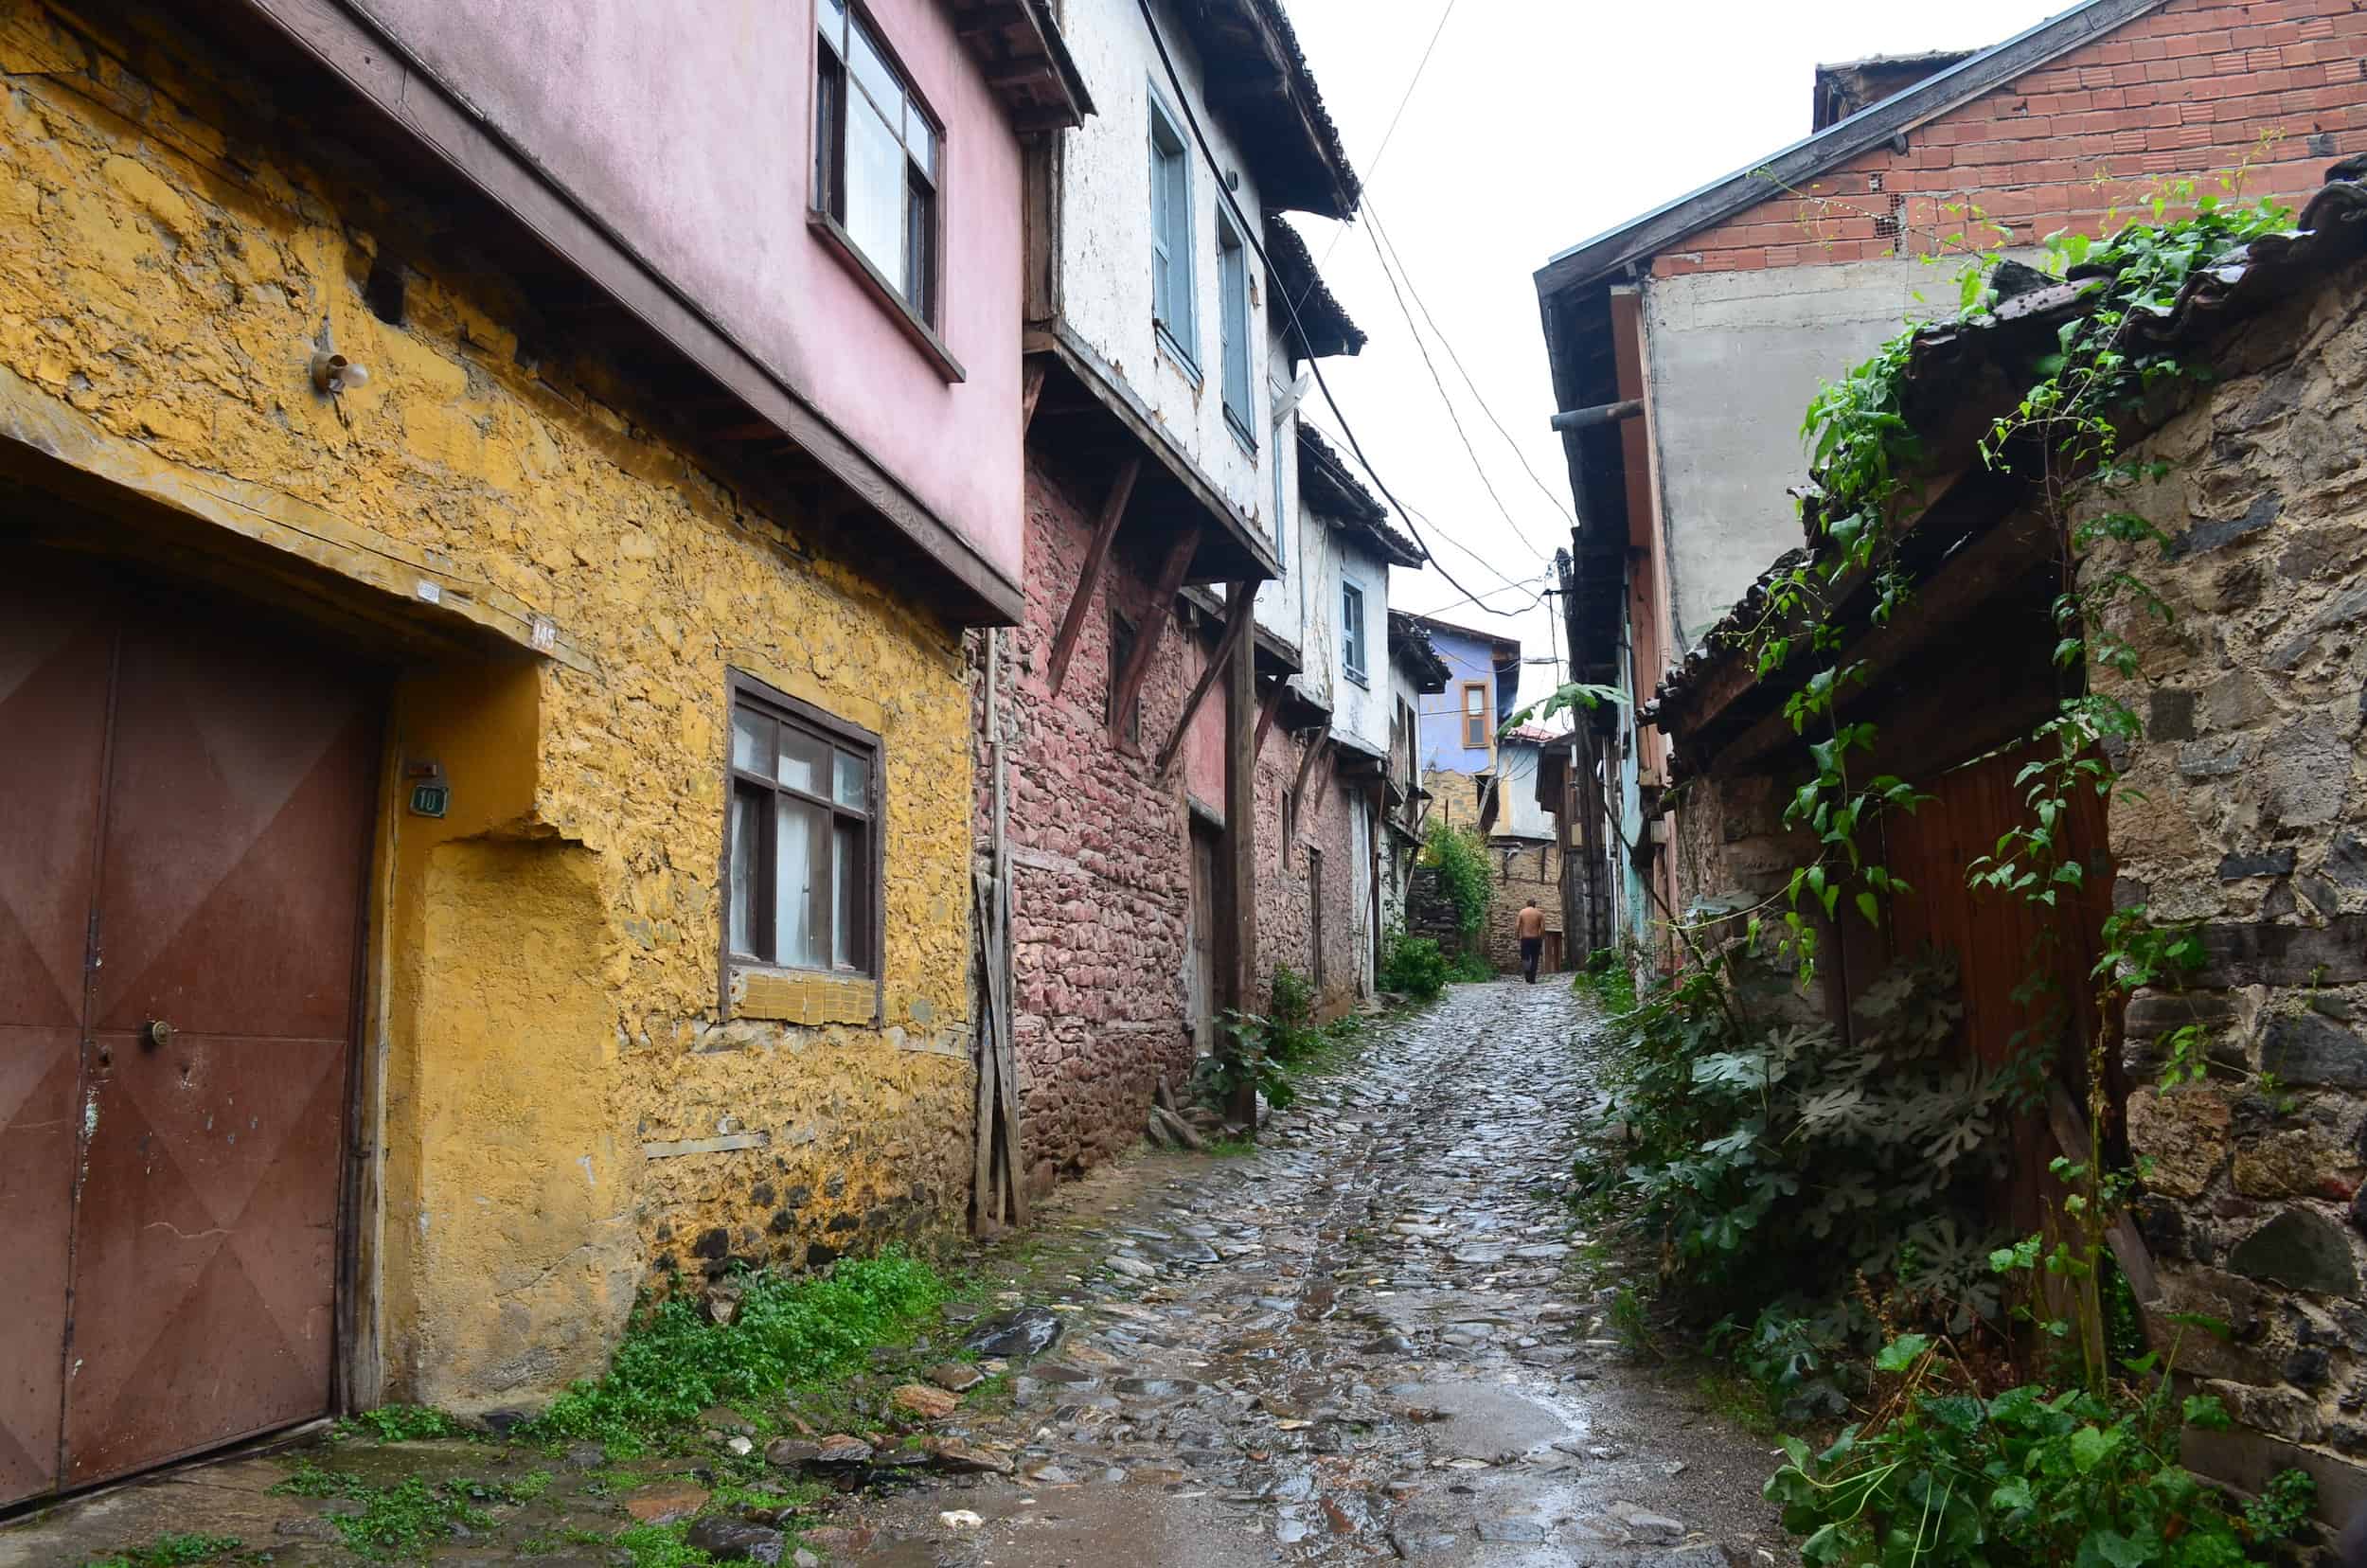 Quiet street through the village in Cumalıkızık, Bursa, Turkey